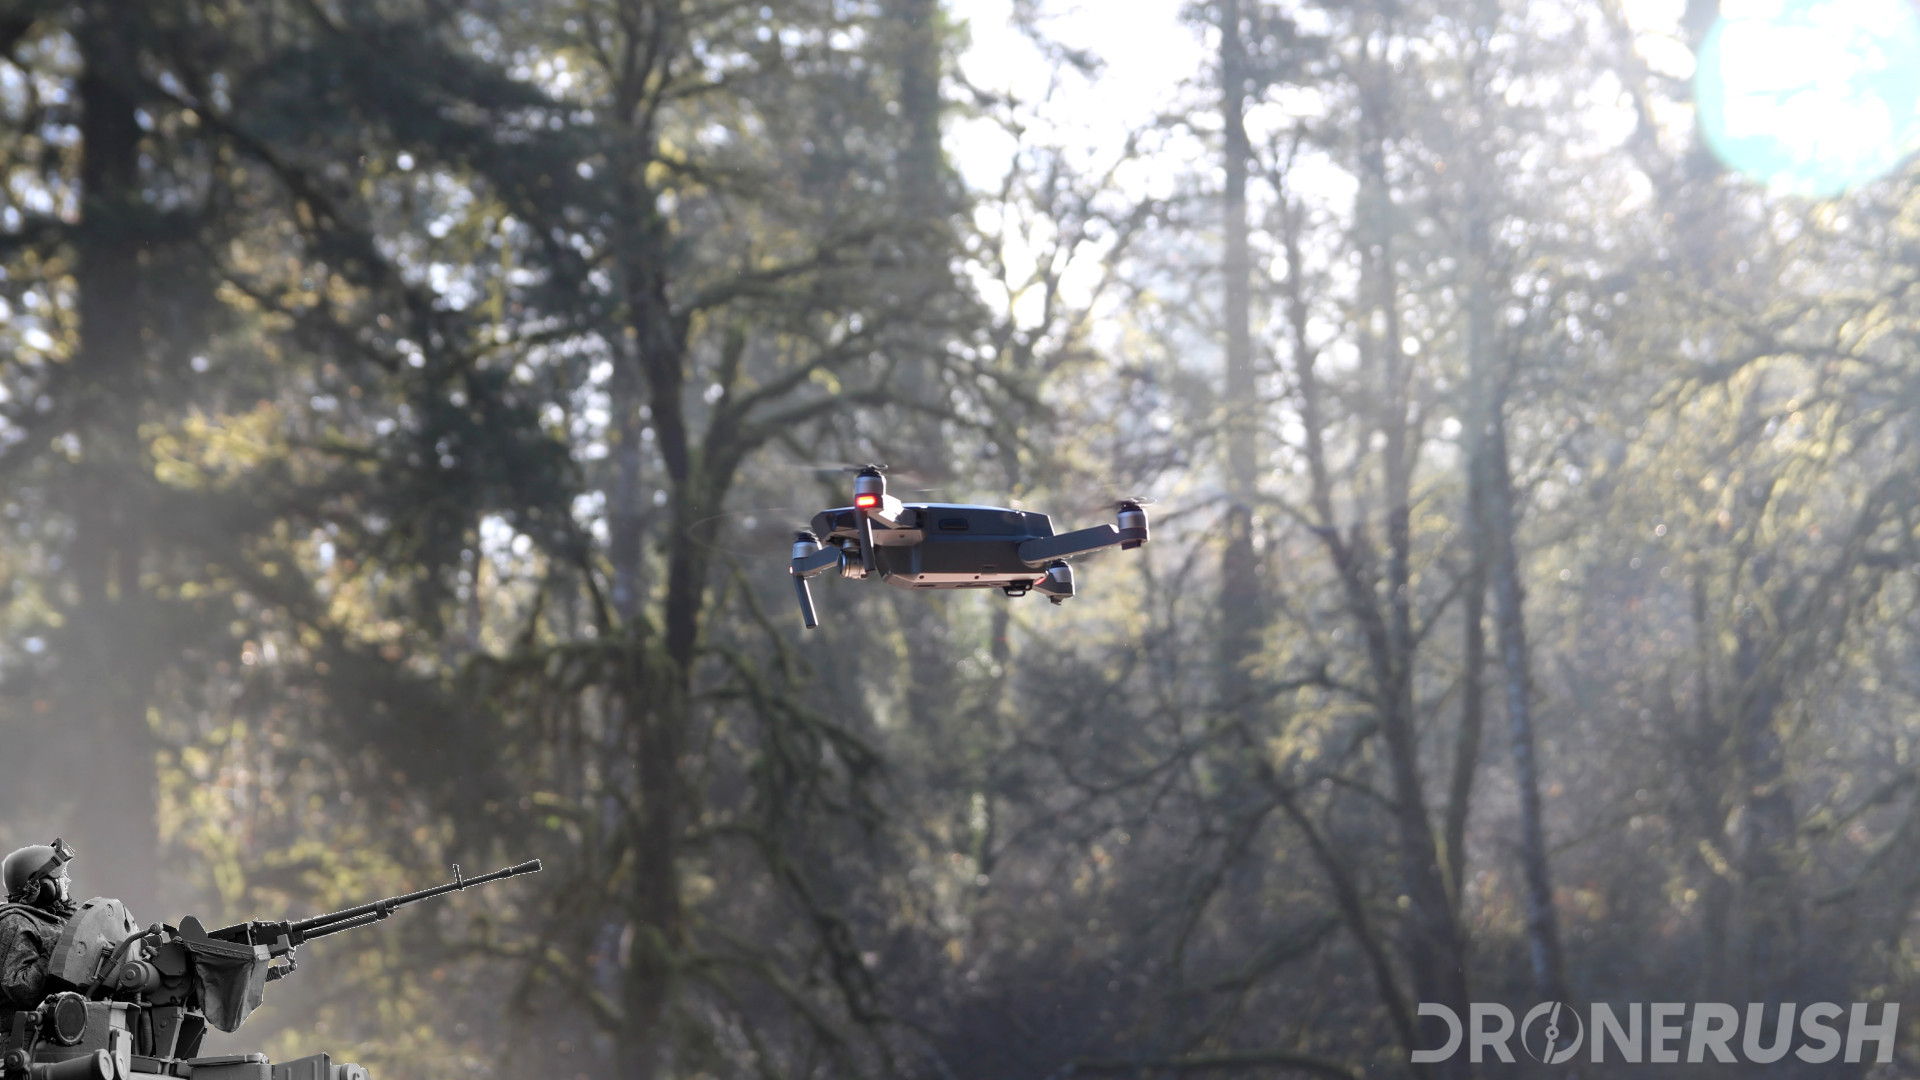 DJI Mavic Pro hovering next to a machine gun - Don't shoot drones, its illegal.